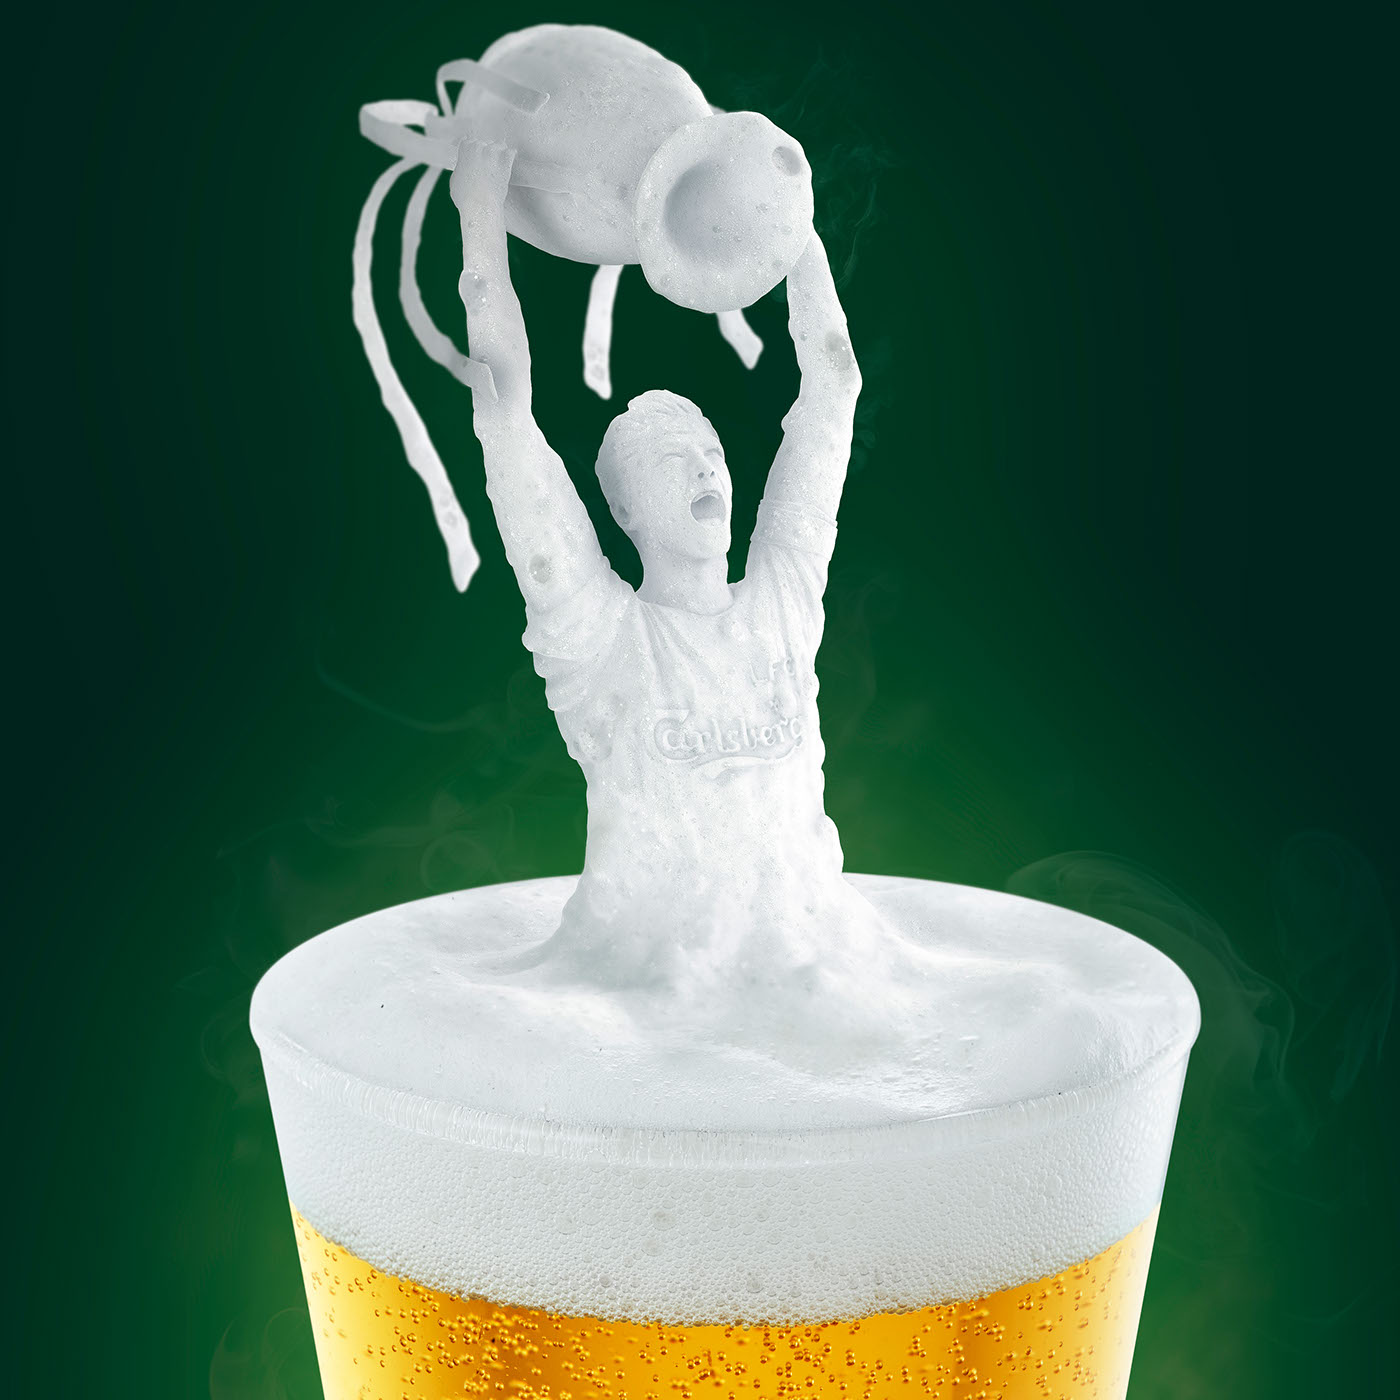 Foam CGI Carlsberg beer